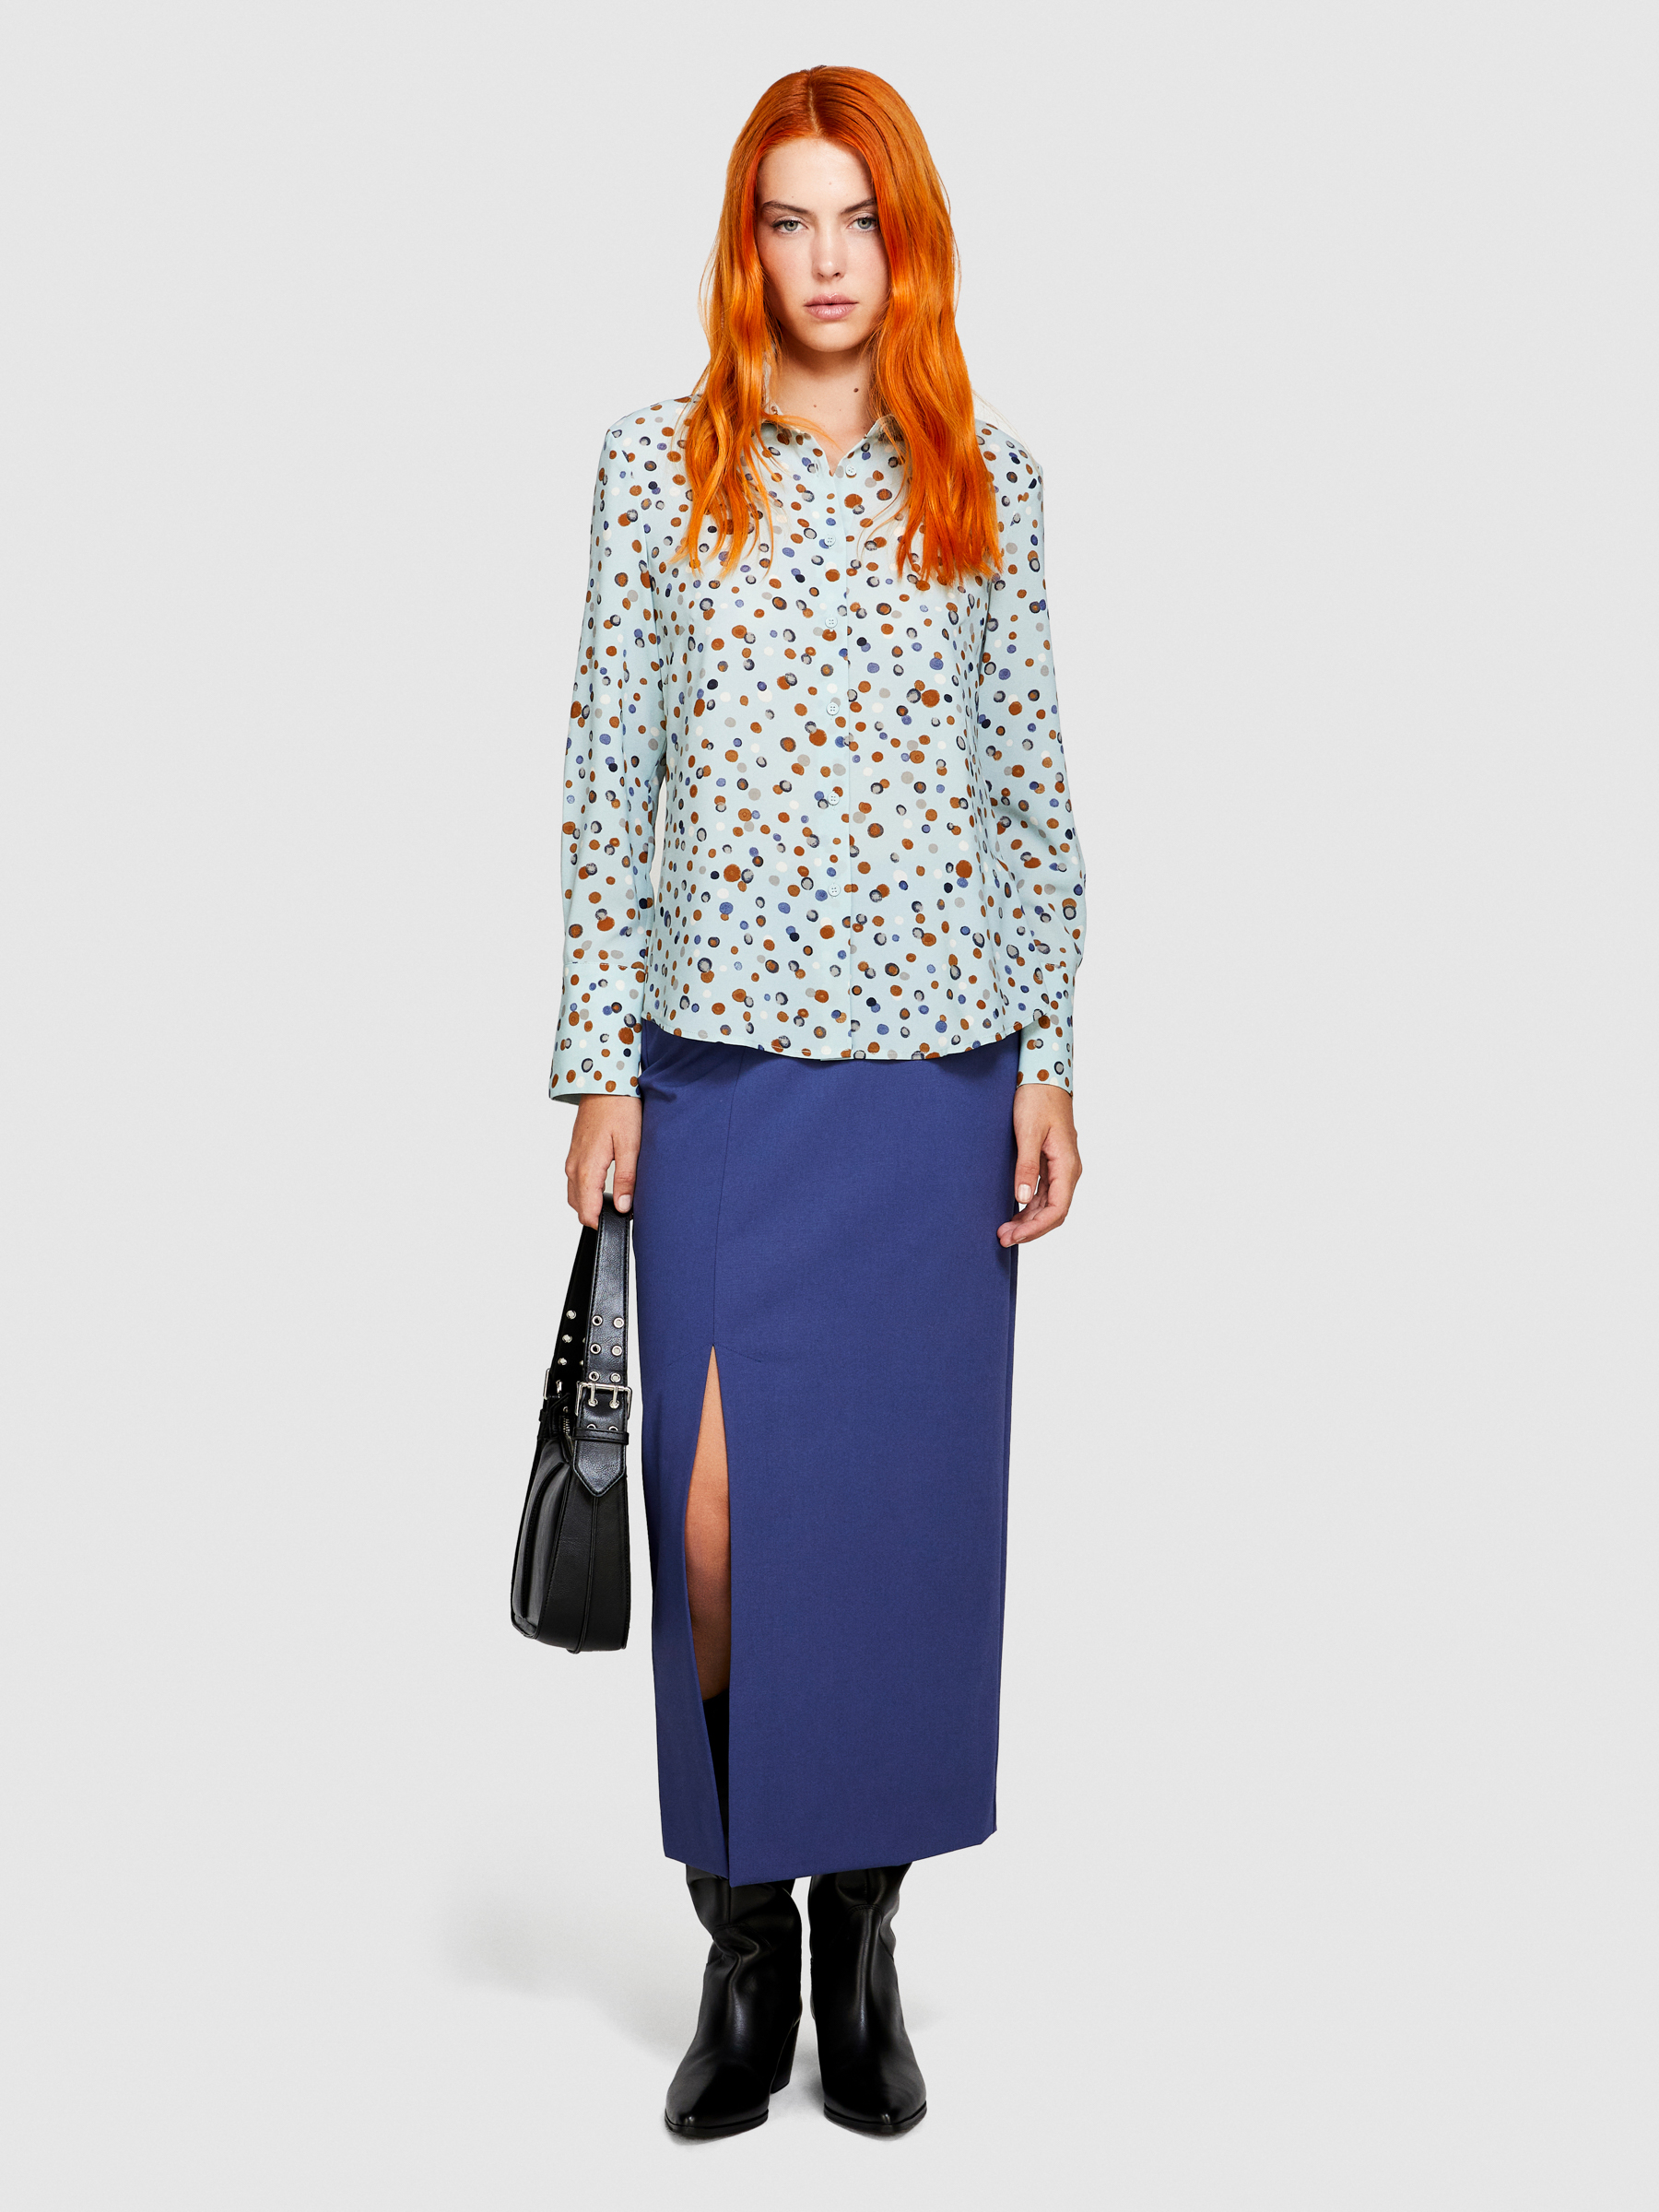 Sisley - Printed Shirt, Woman, Multi-color, Size: M